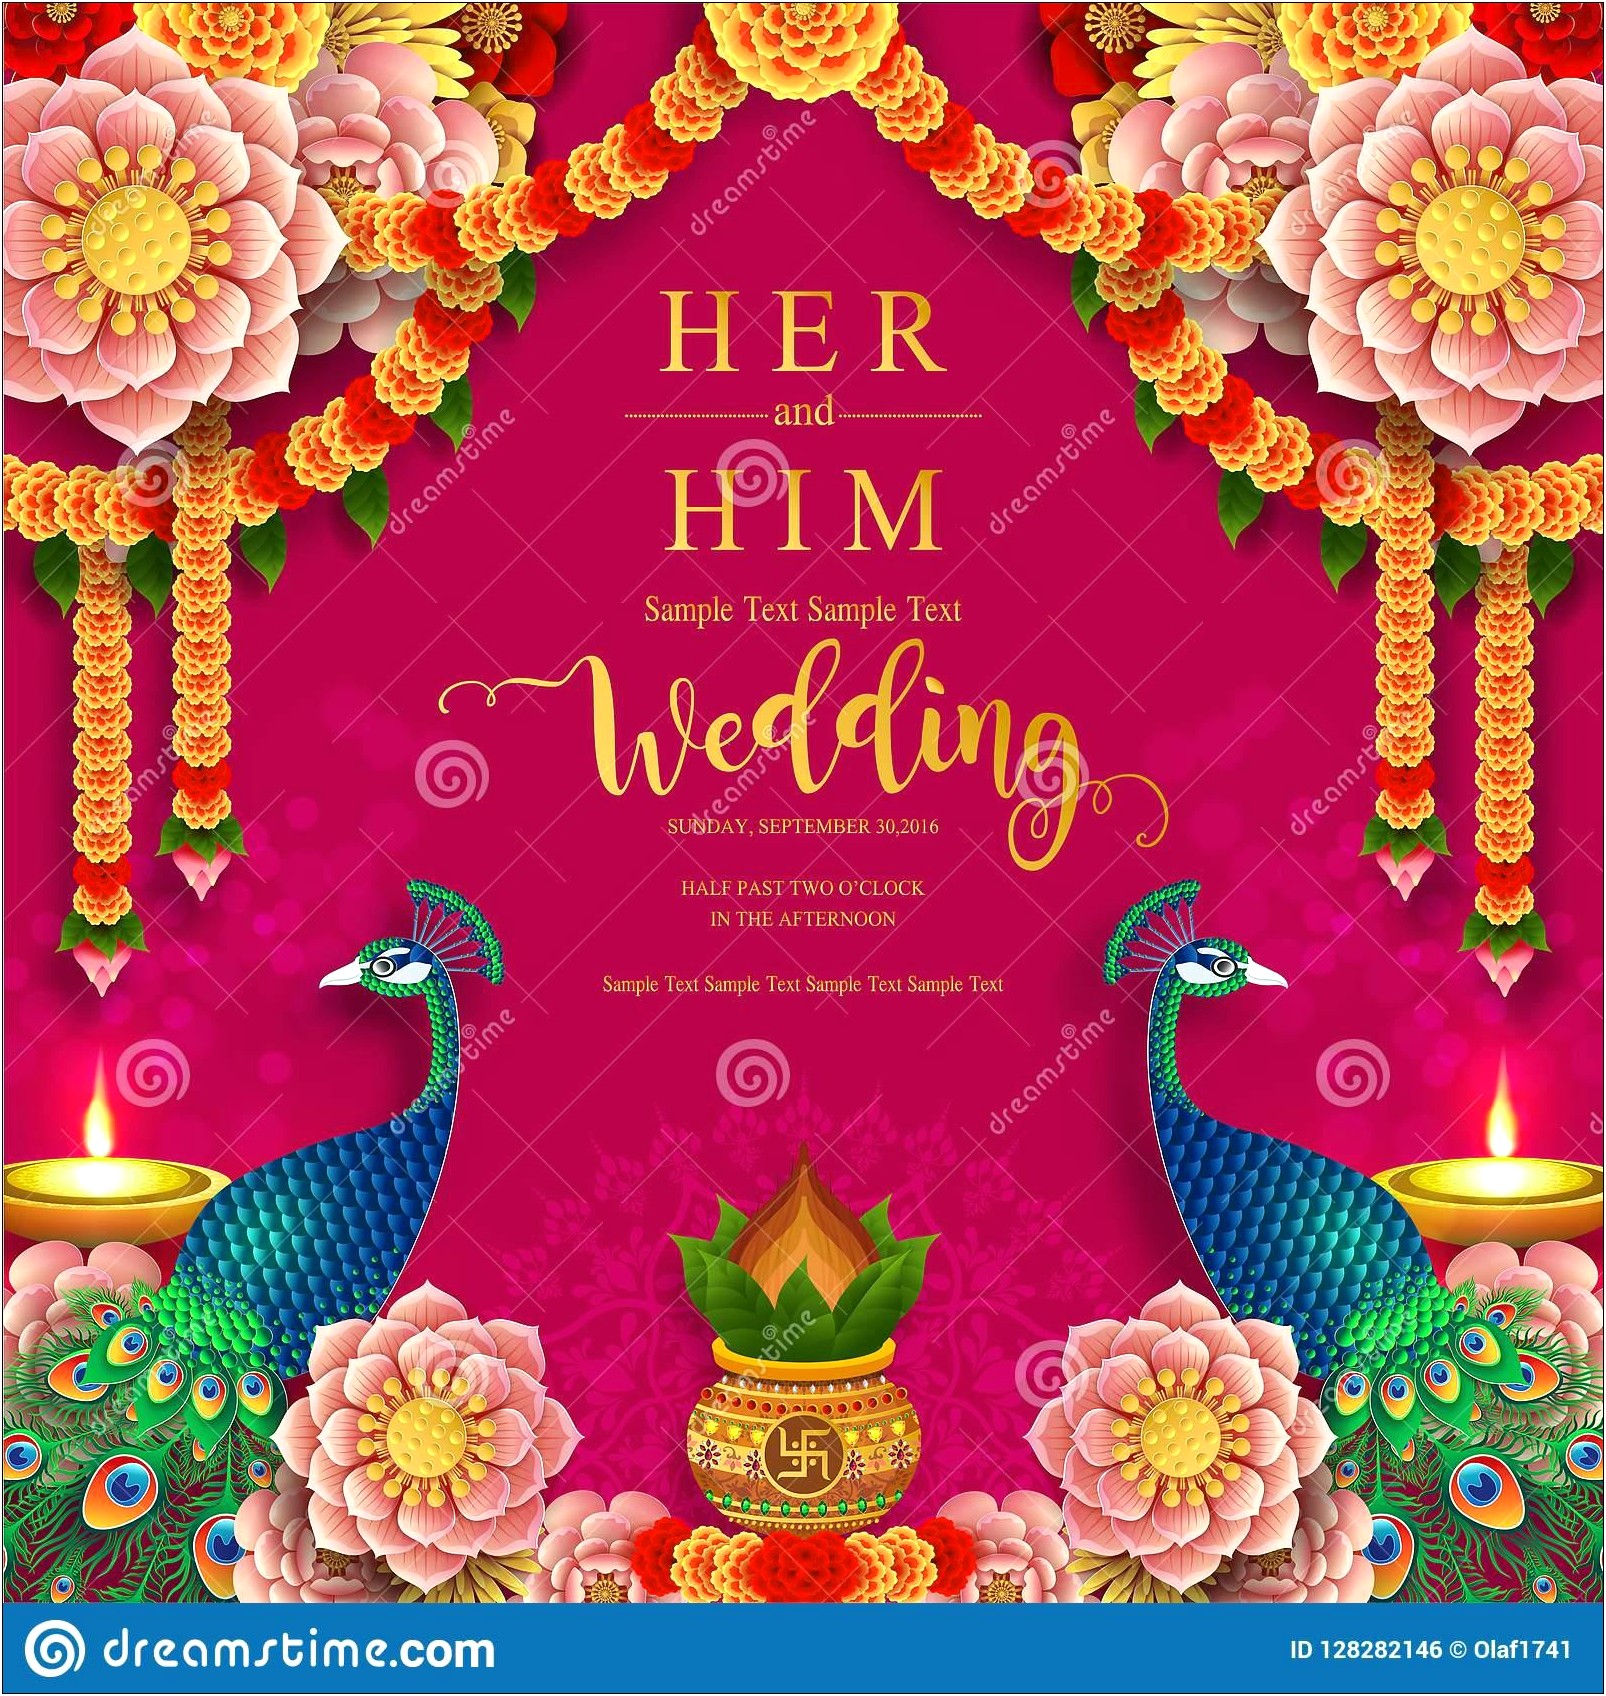 Download Free Indian Wedding Invitation Templates